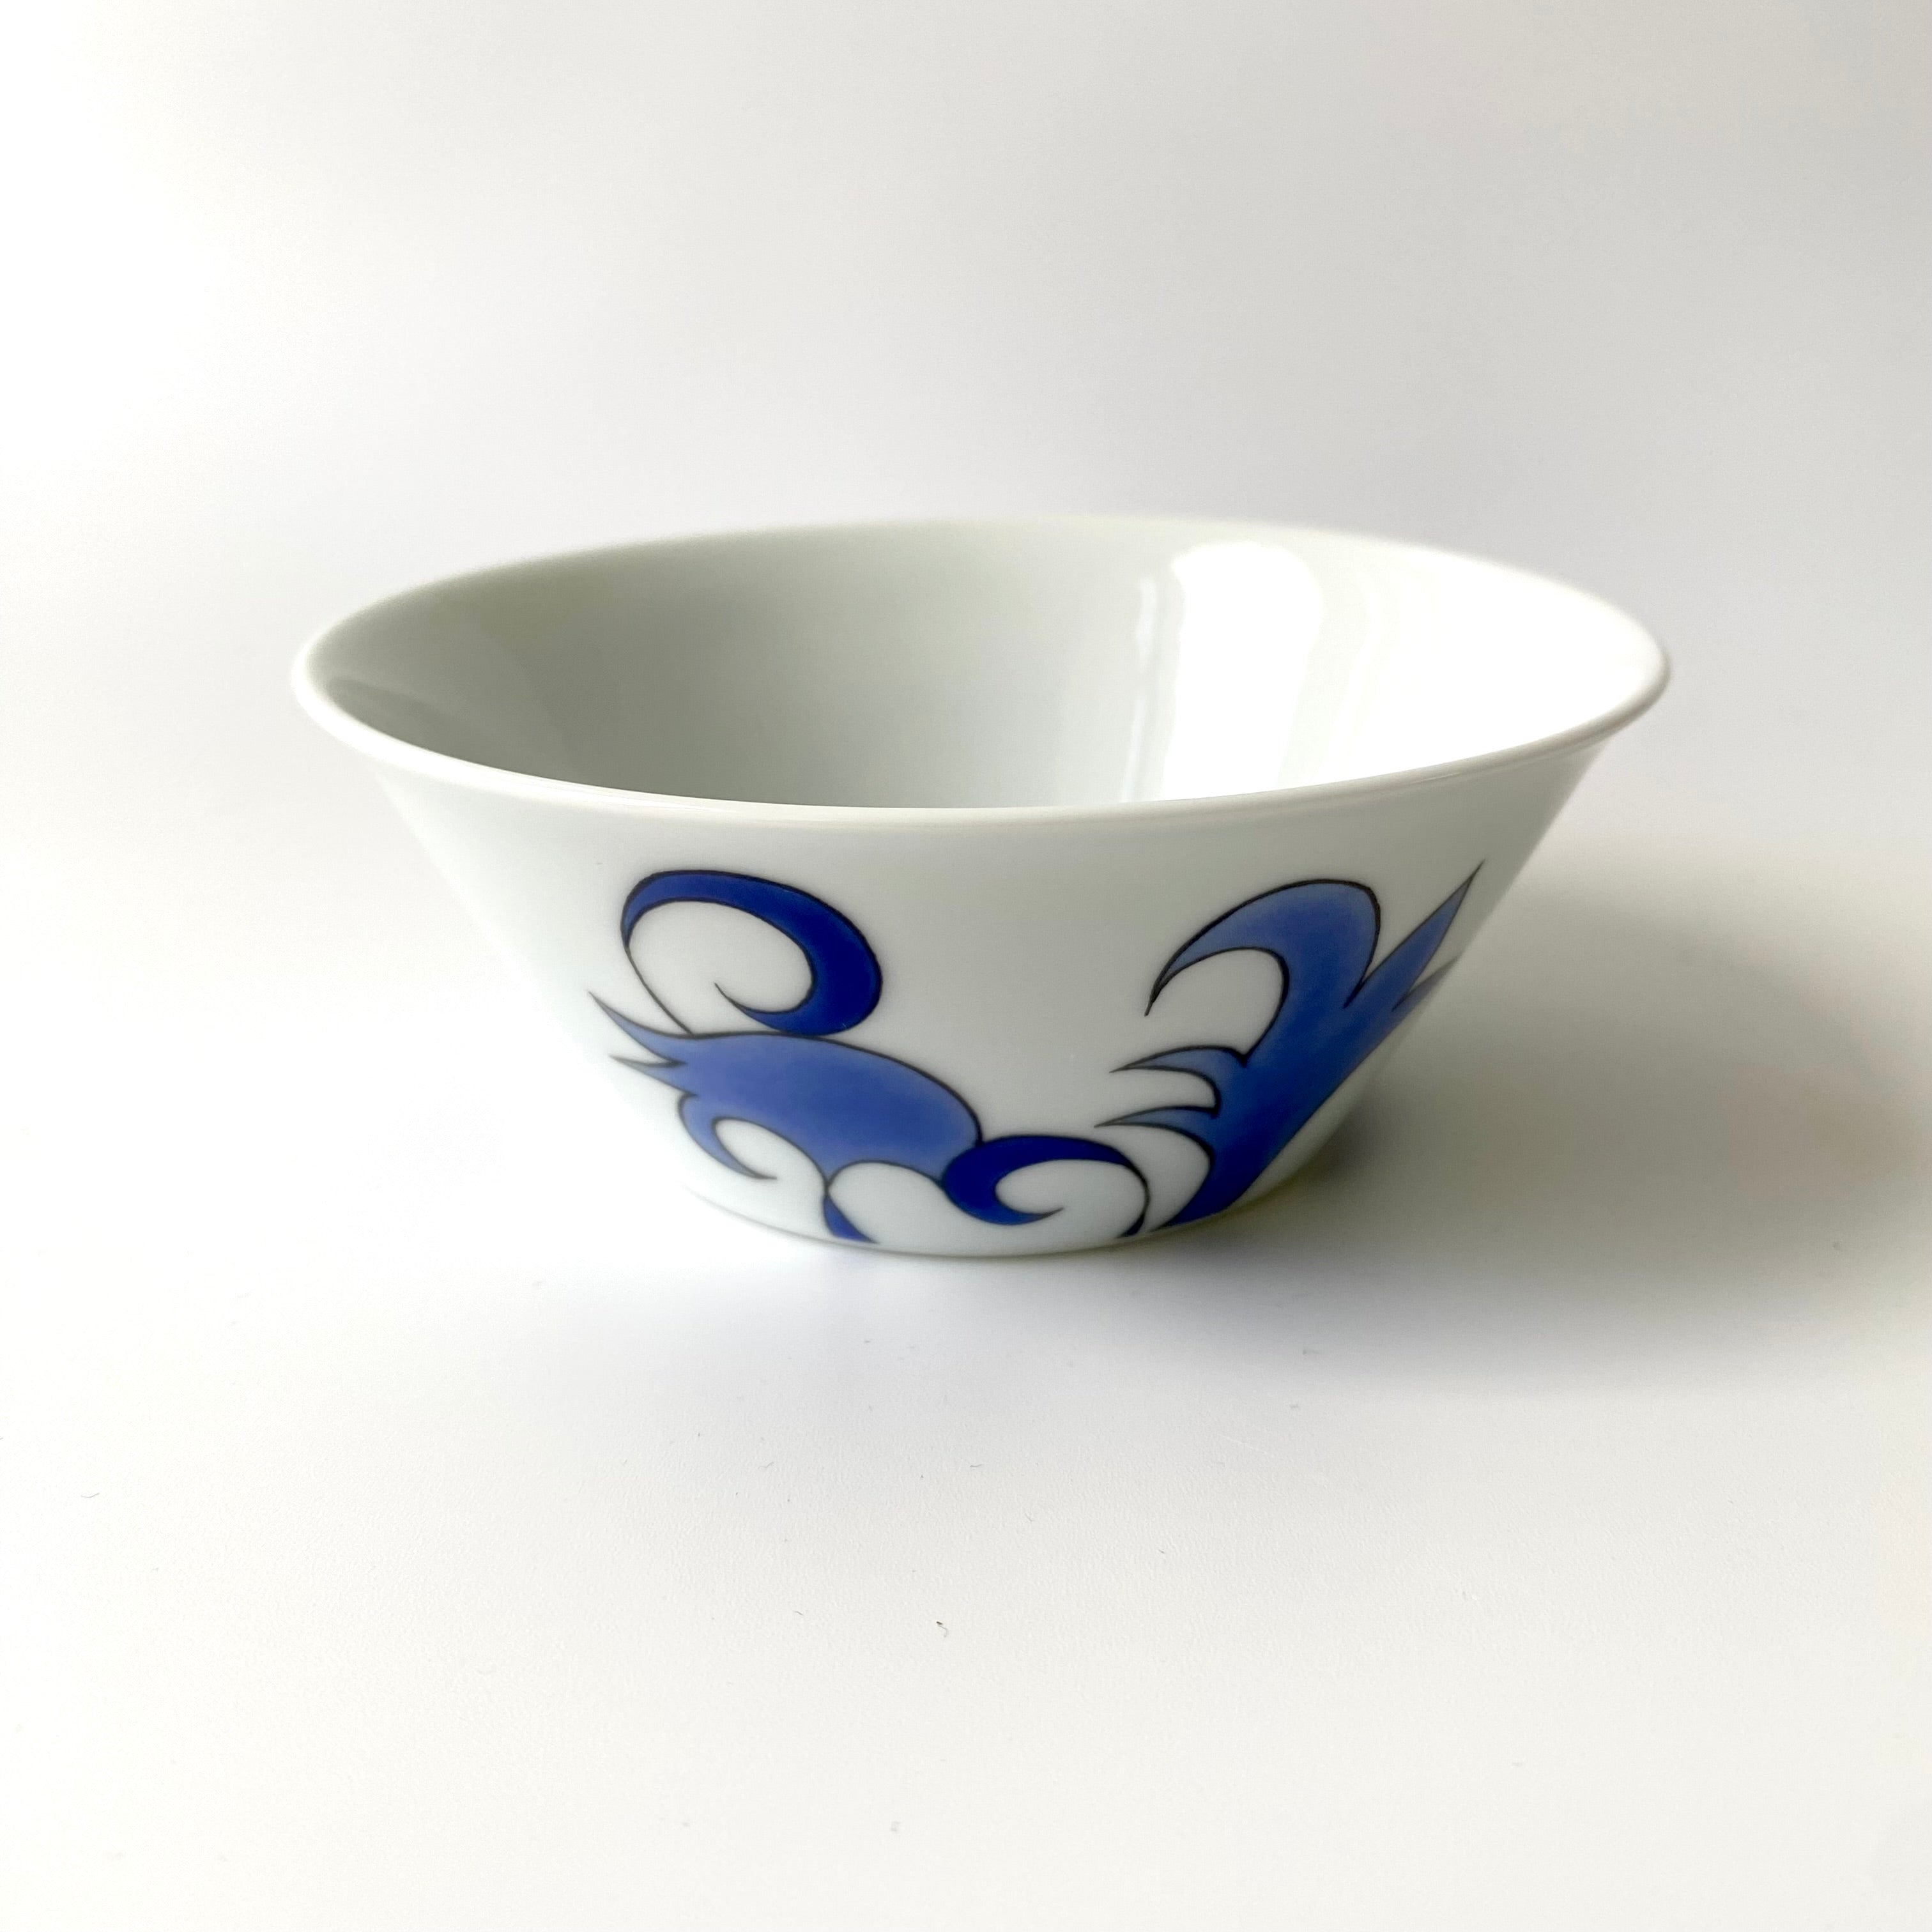 Tetote small bowl / bowl 